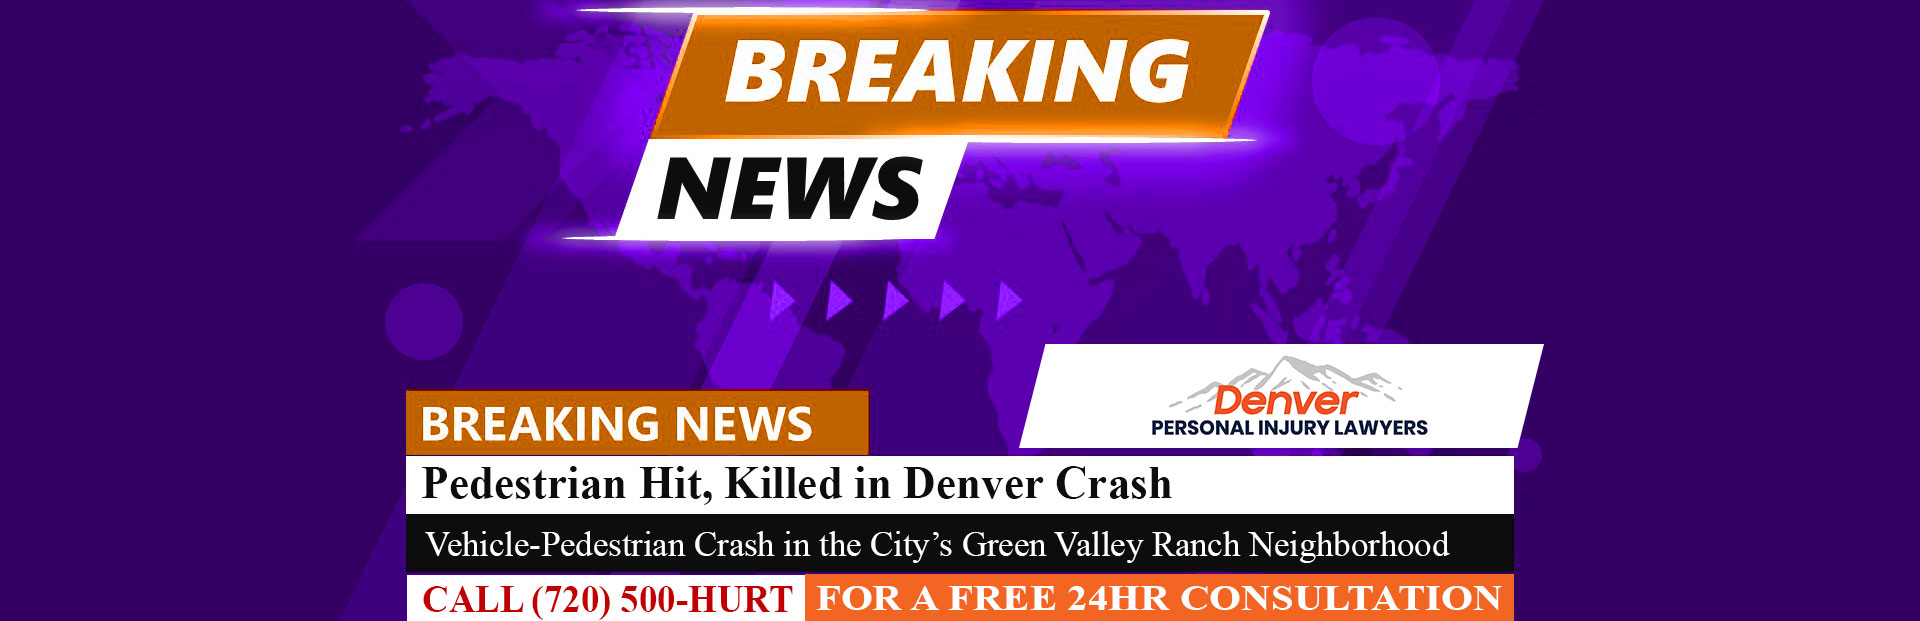 [12-02-22] Pedestrian Hit, Killed in Denver Crash